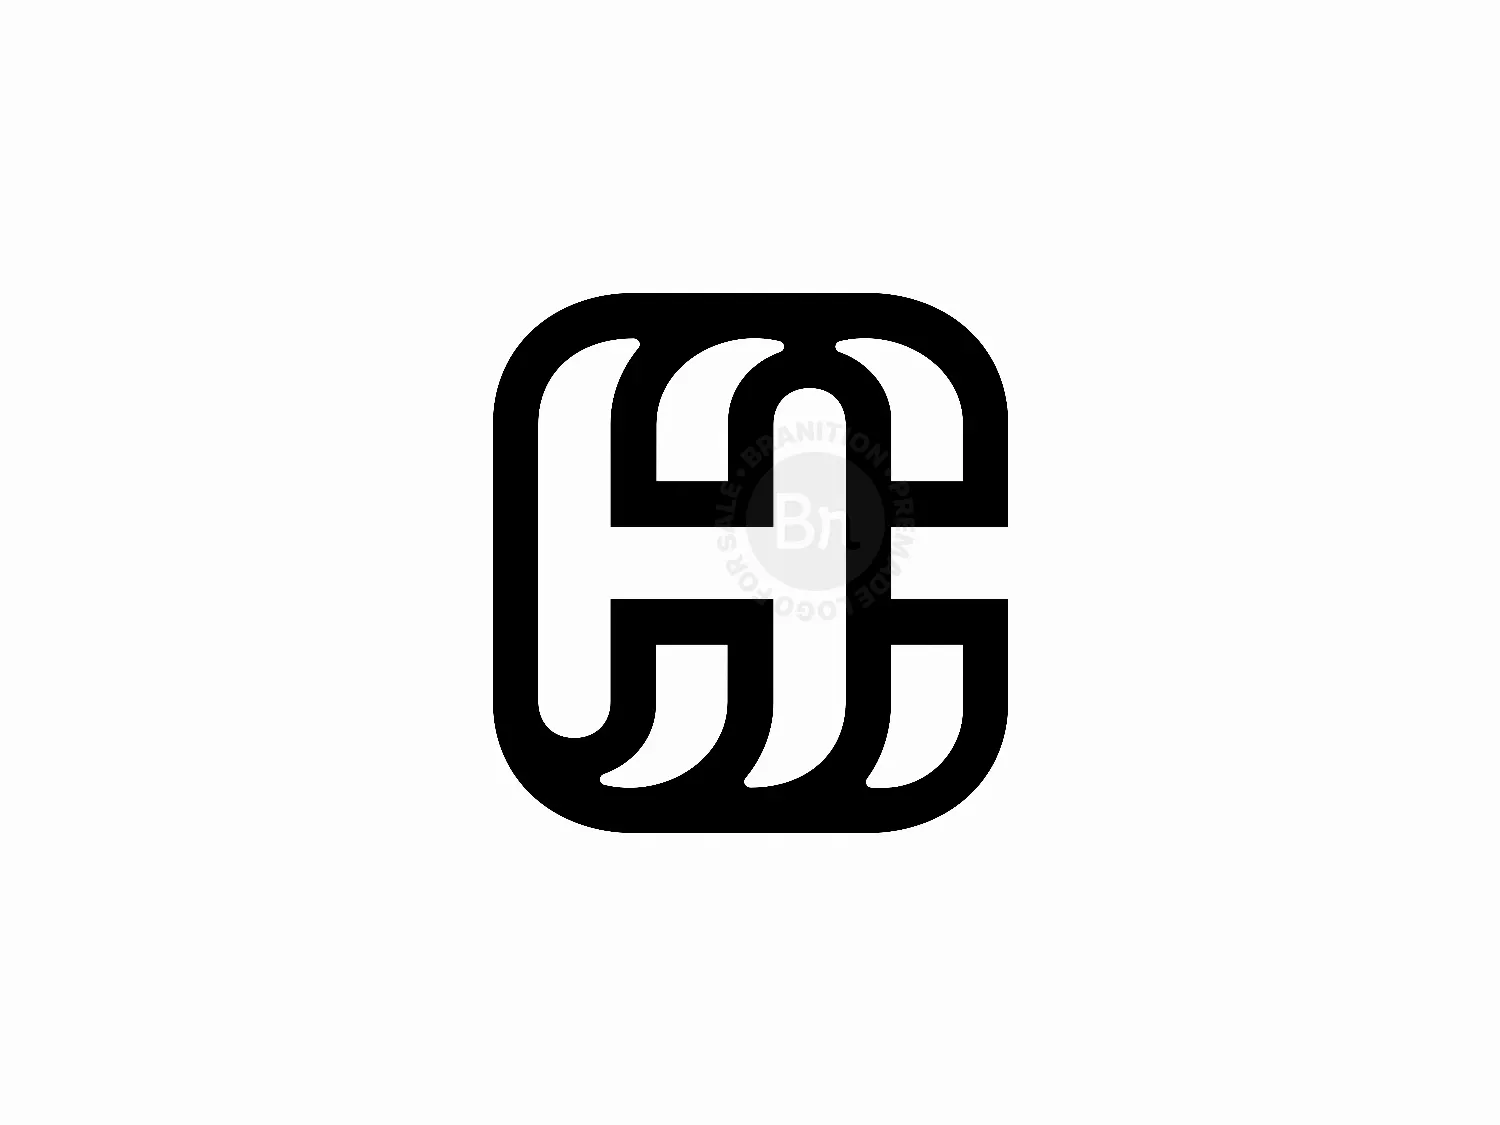 Professional Innovative Initial Gh Logo And Hg Logo Letter Gh Or Hg Minimal  Elegant Monogram Premium Business Artistic Alphabet Symbol And Sign Stock  Illustration - Download Image Now - iStock